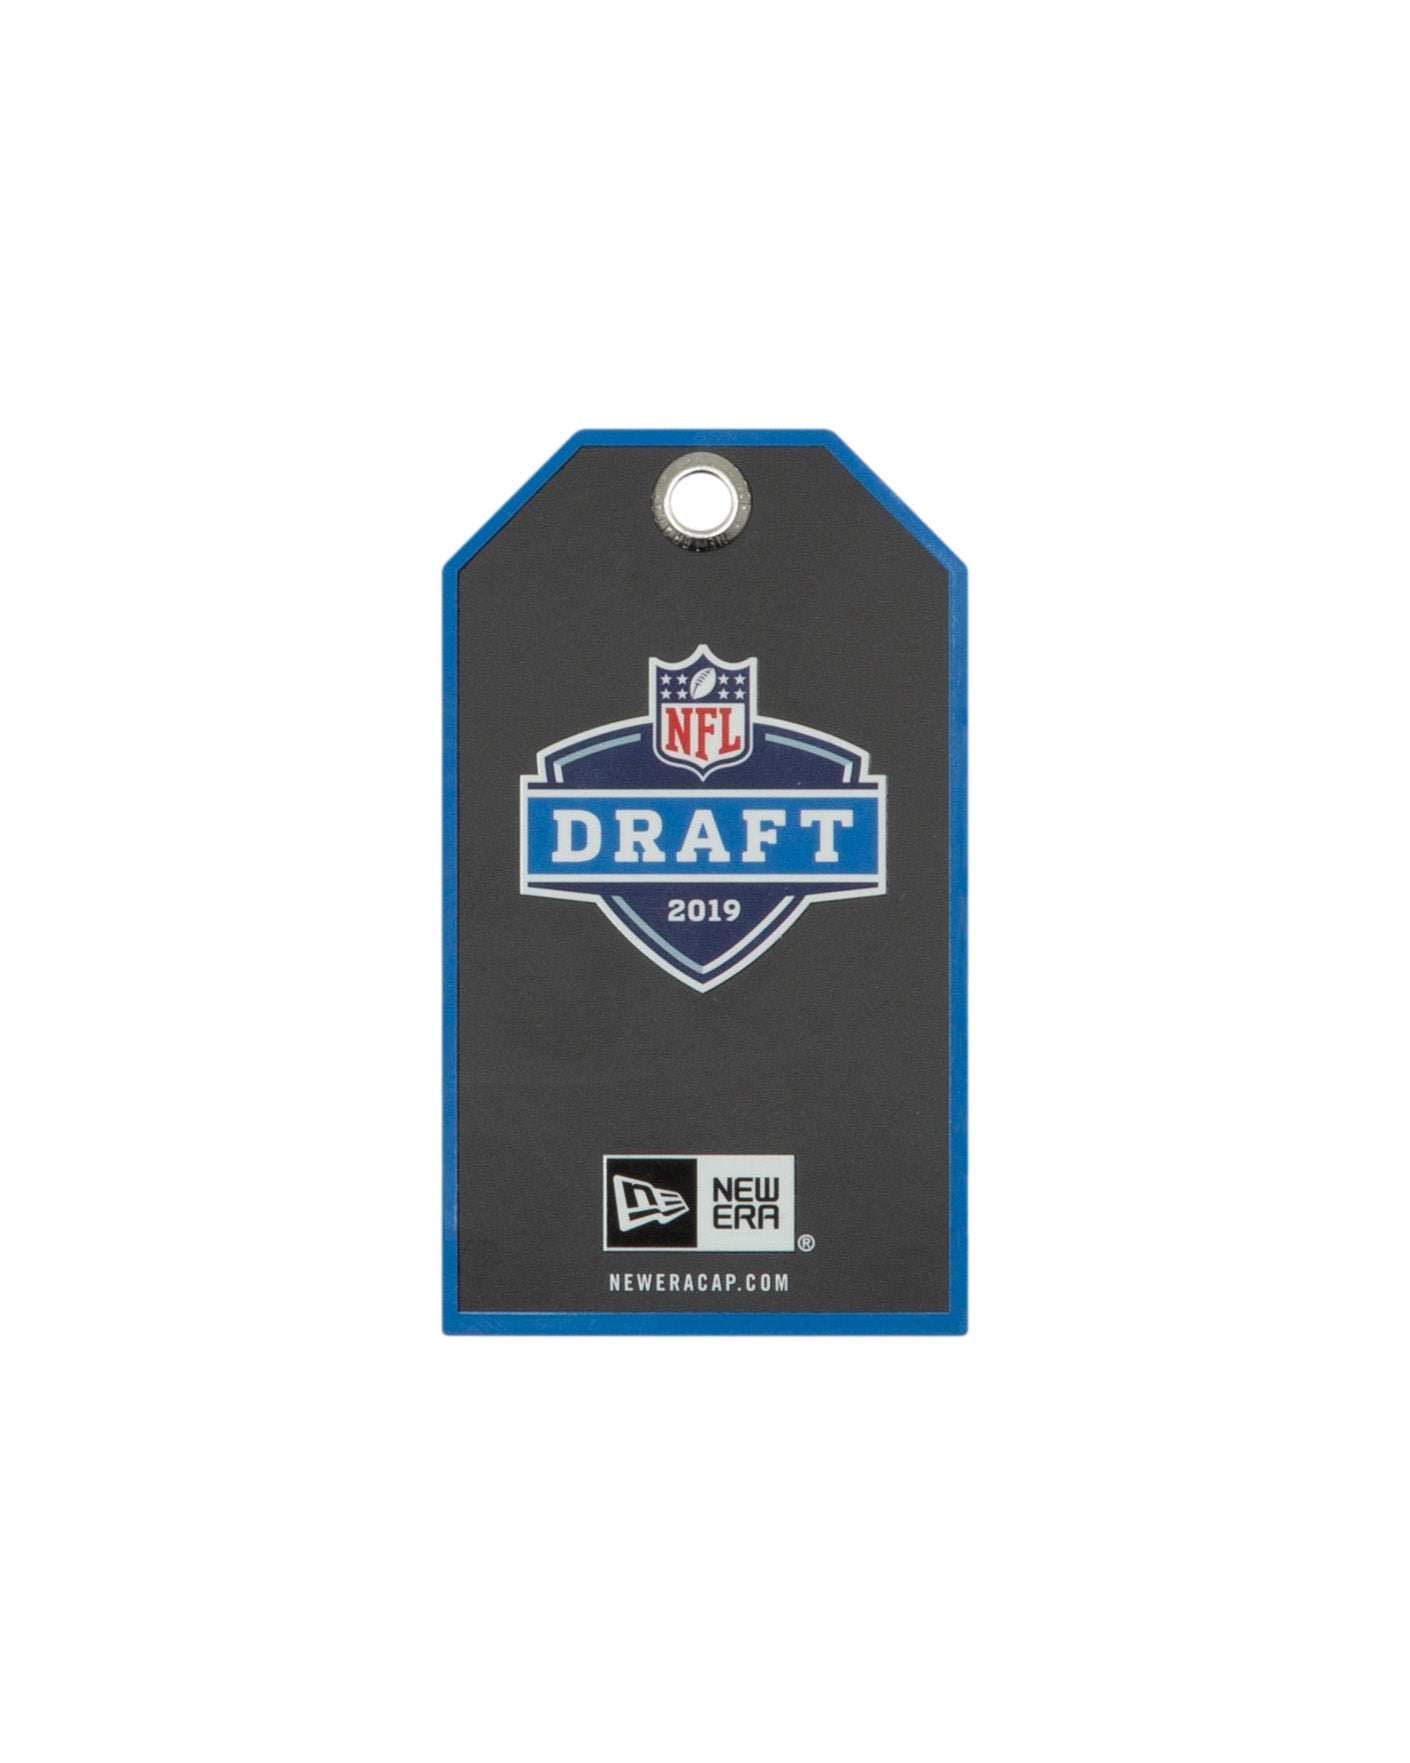 Minnesota Vikings New Era 2019 NFL Draft On-Stage Official 39THIRTY Flex Hat